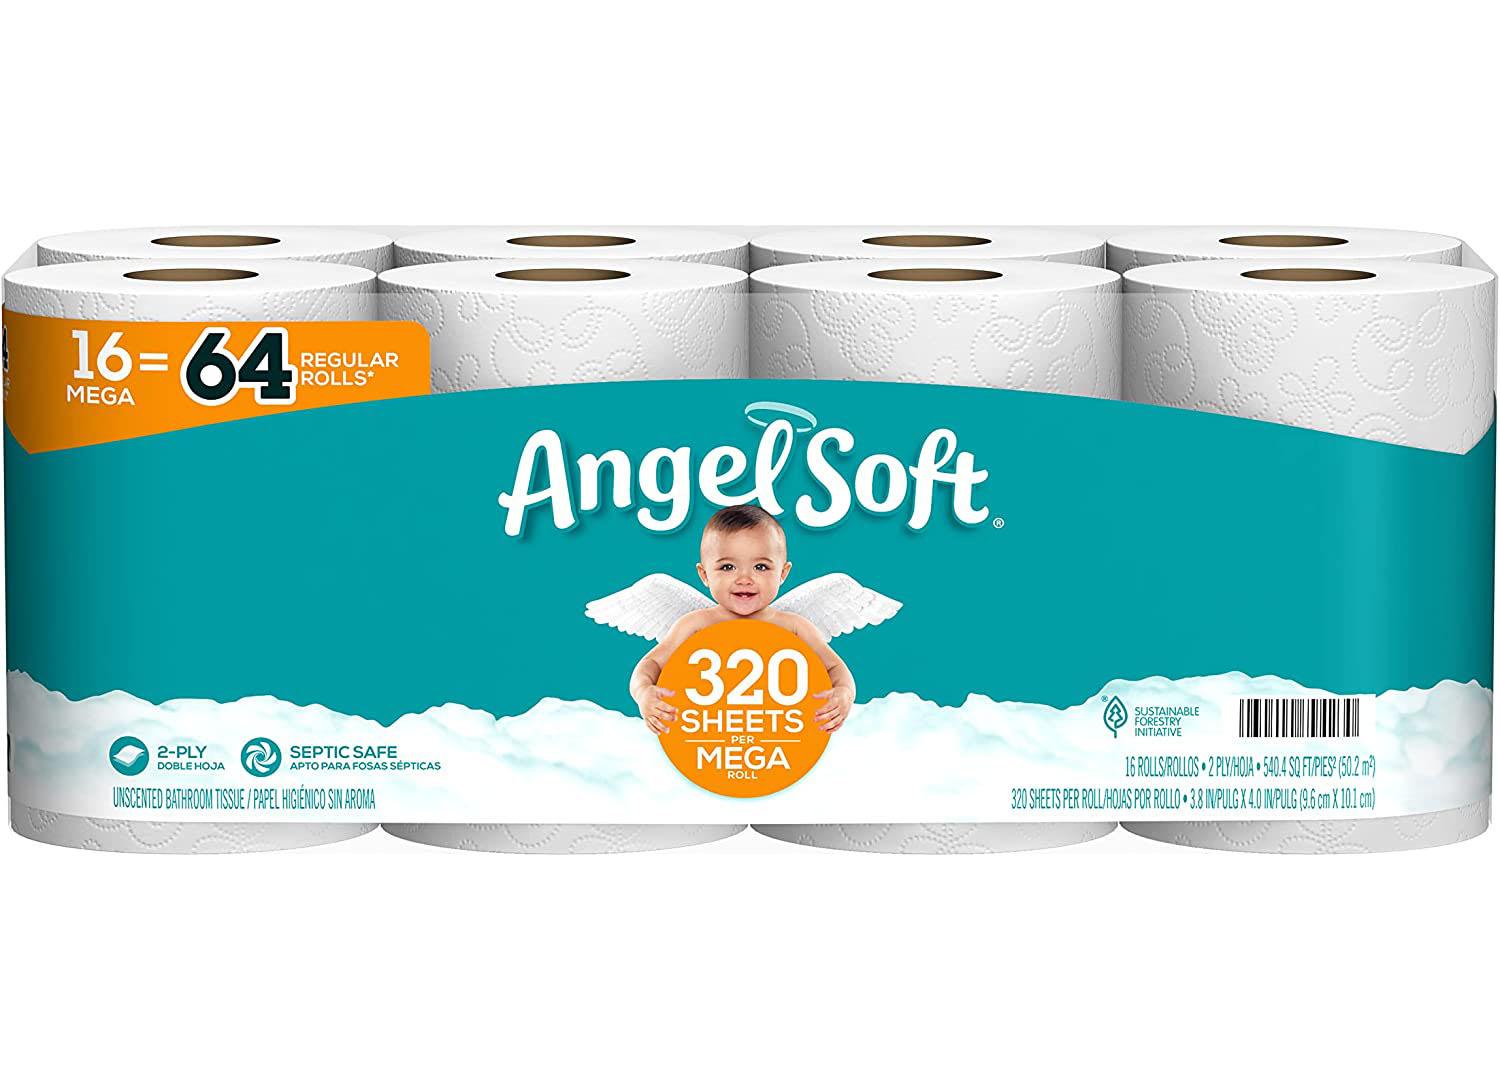 Angel Soft Mega Rolls 2-Ply Toilet Paper 16 Pack for $9.99